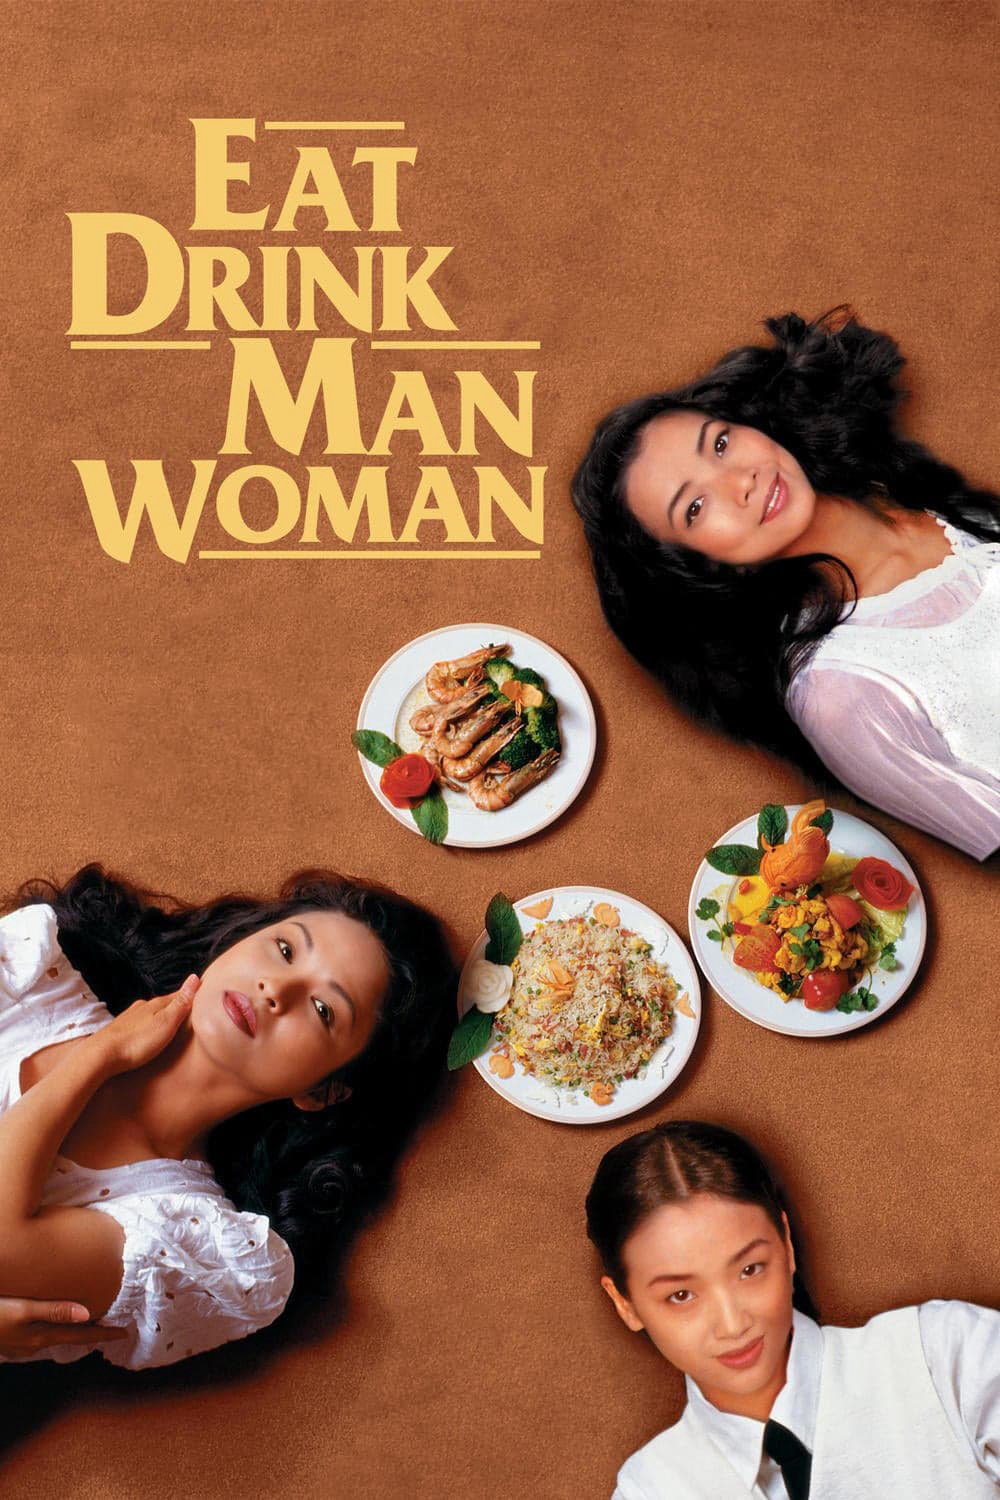 Ẩm Thực Nam Nữ - Eat Drink Man Woman